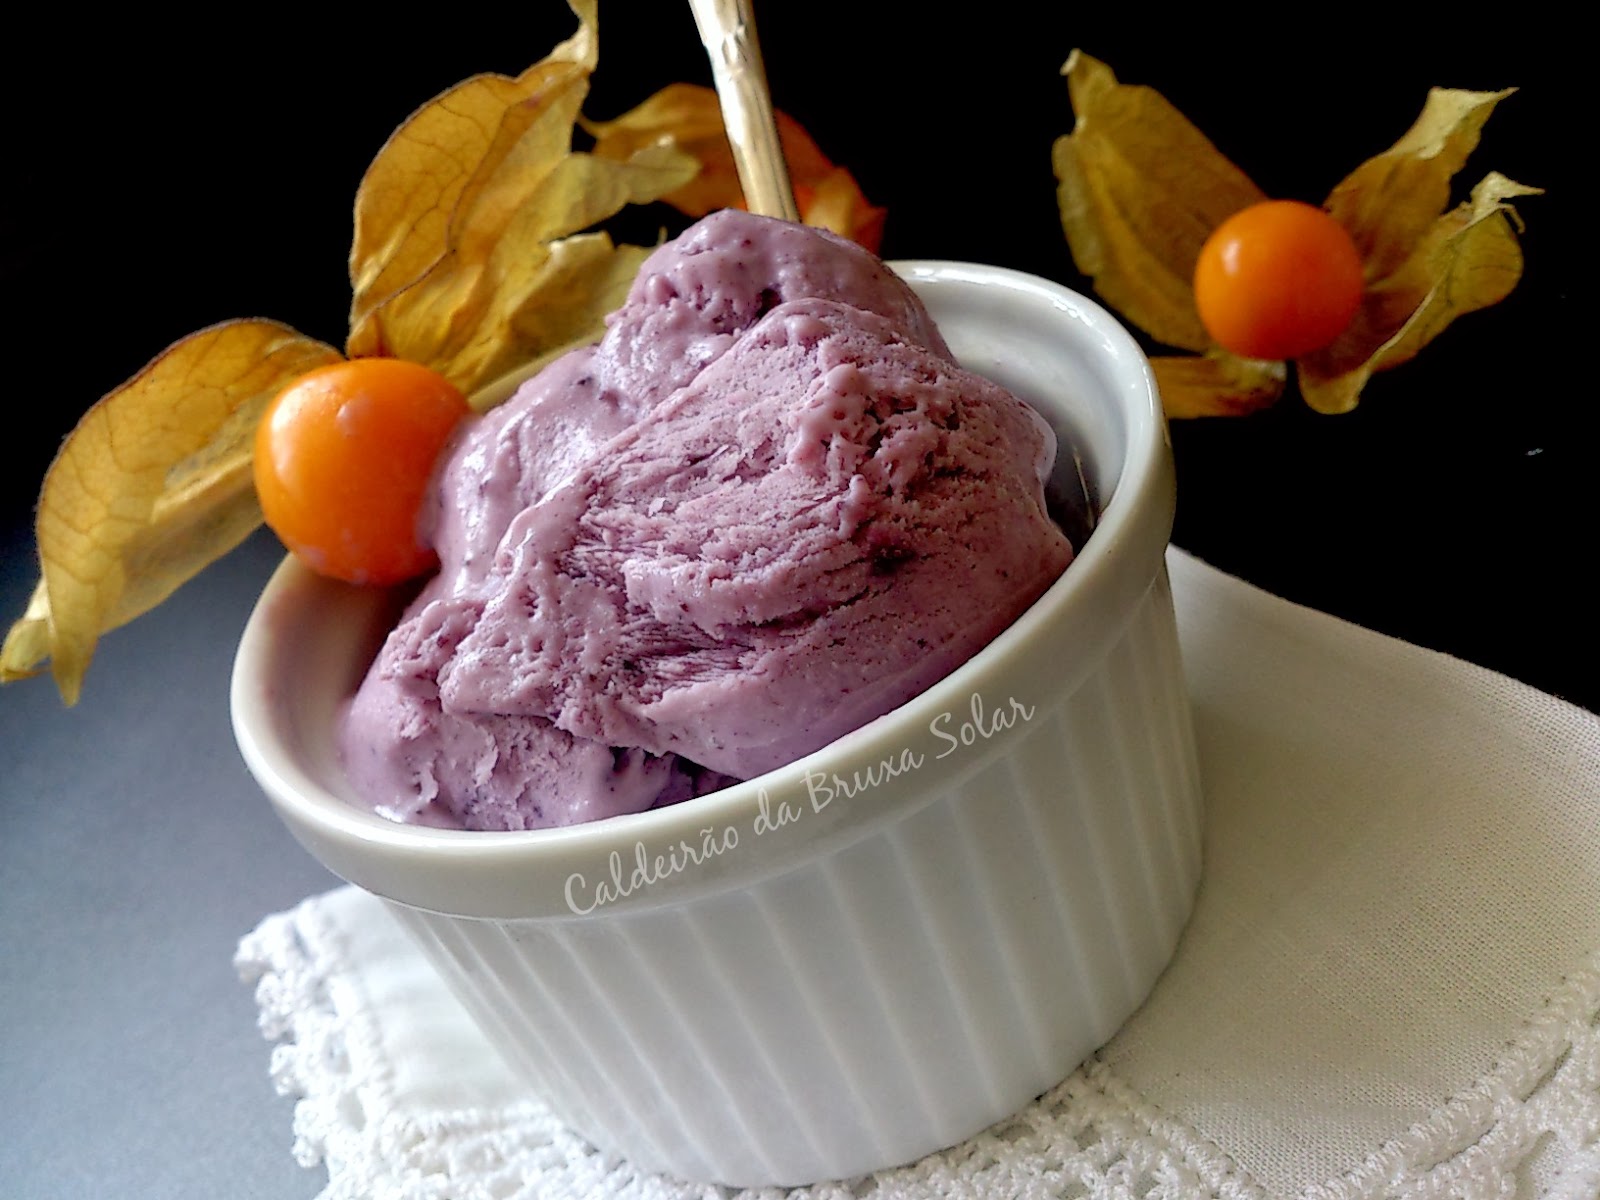 Sorvete de mirtilos (blueberries)